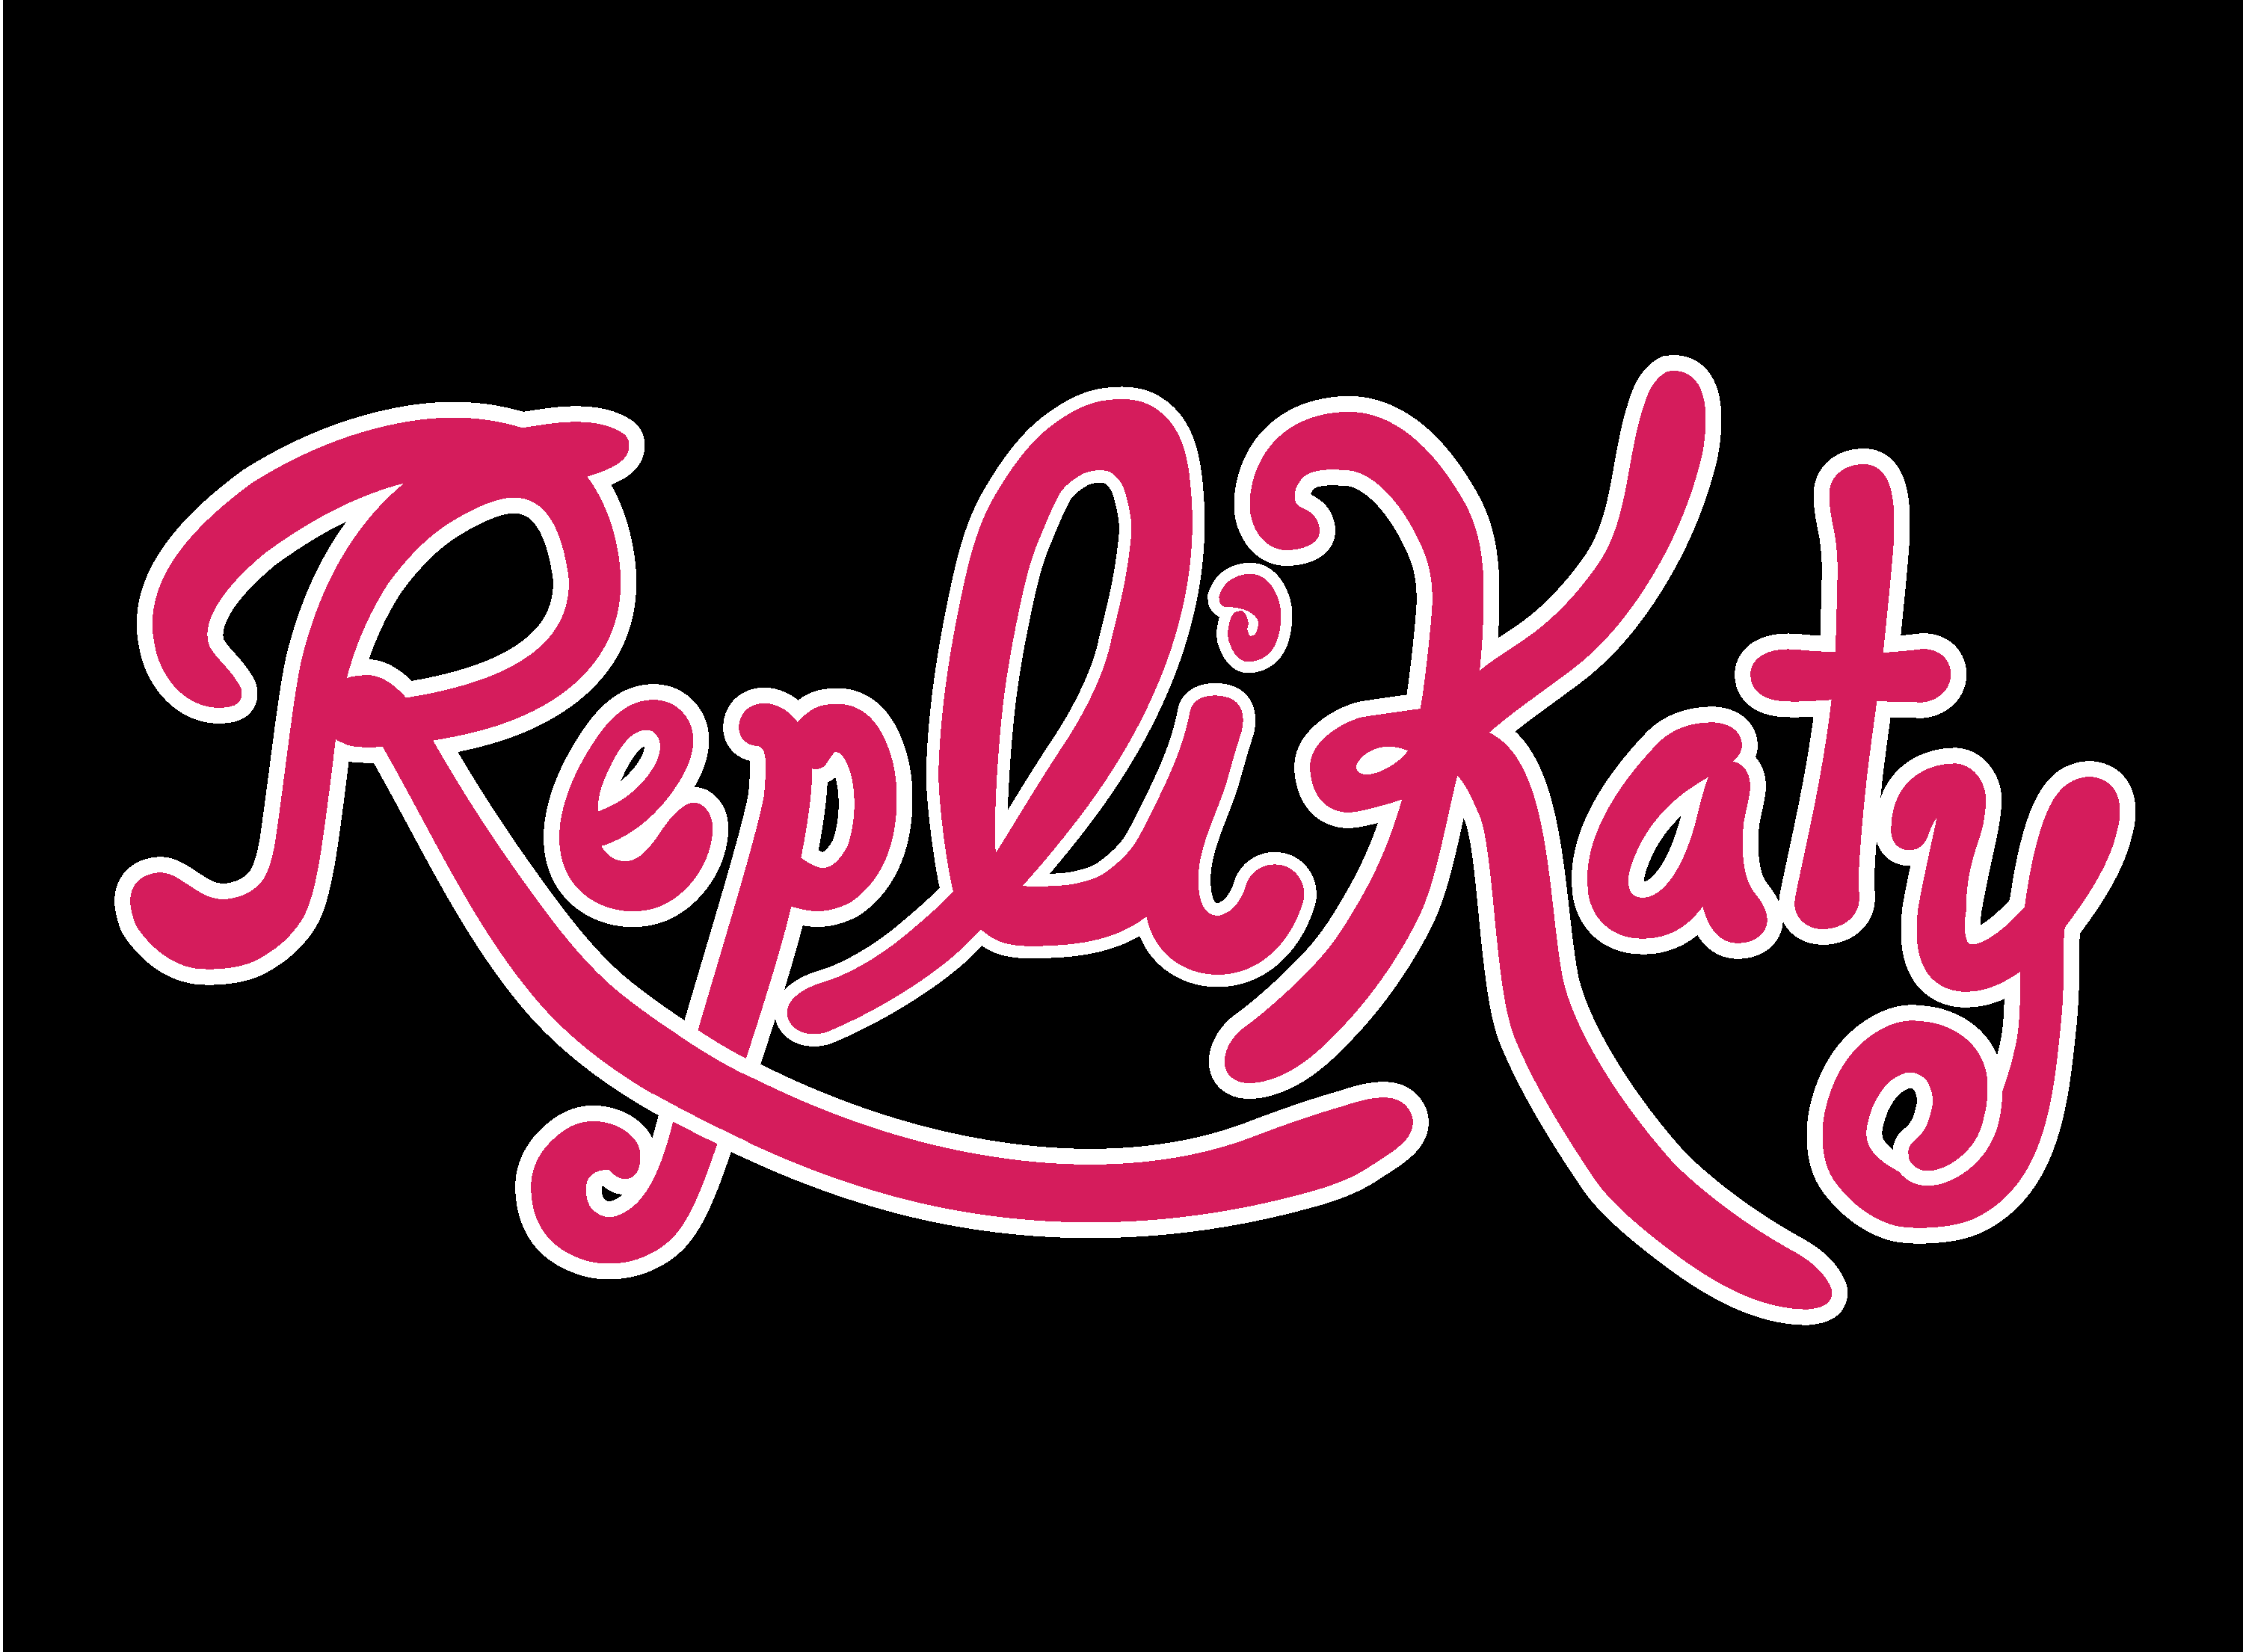 RepliKaty - the Katy Perry tribute band